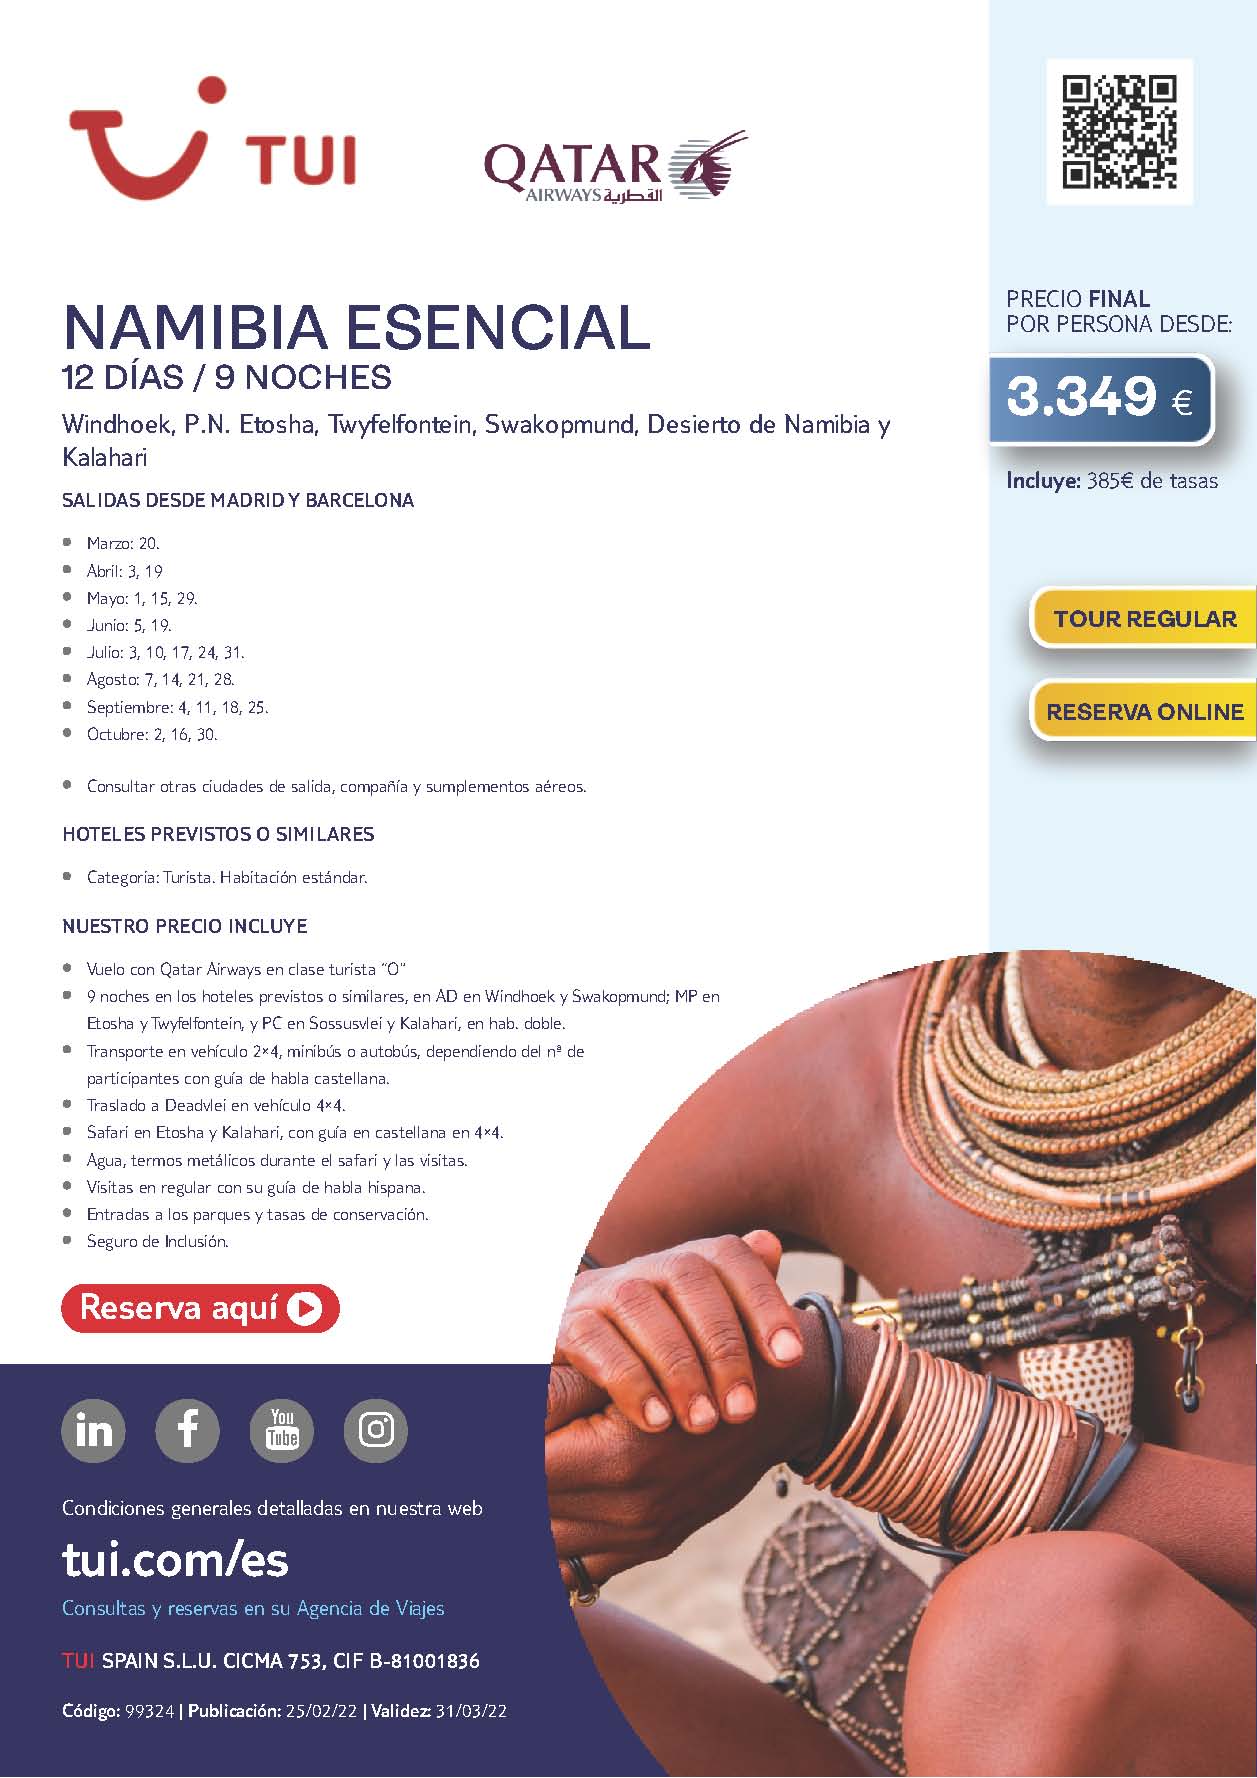 Oferta TUI 2022 Namibia Esencial 12 dias salidas desde Madrid y Barcelona vuelos Qatar Airways